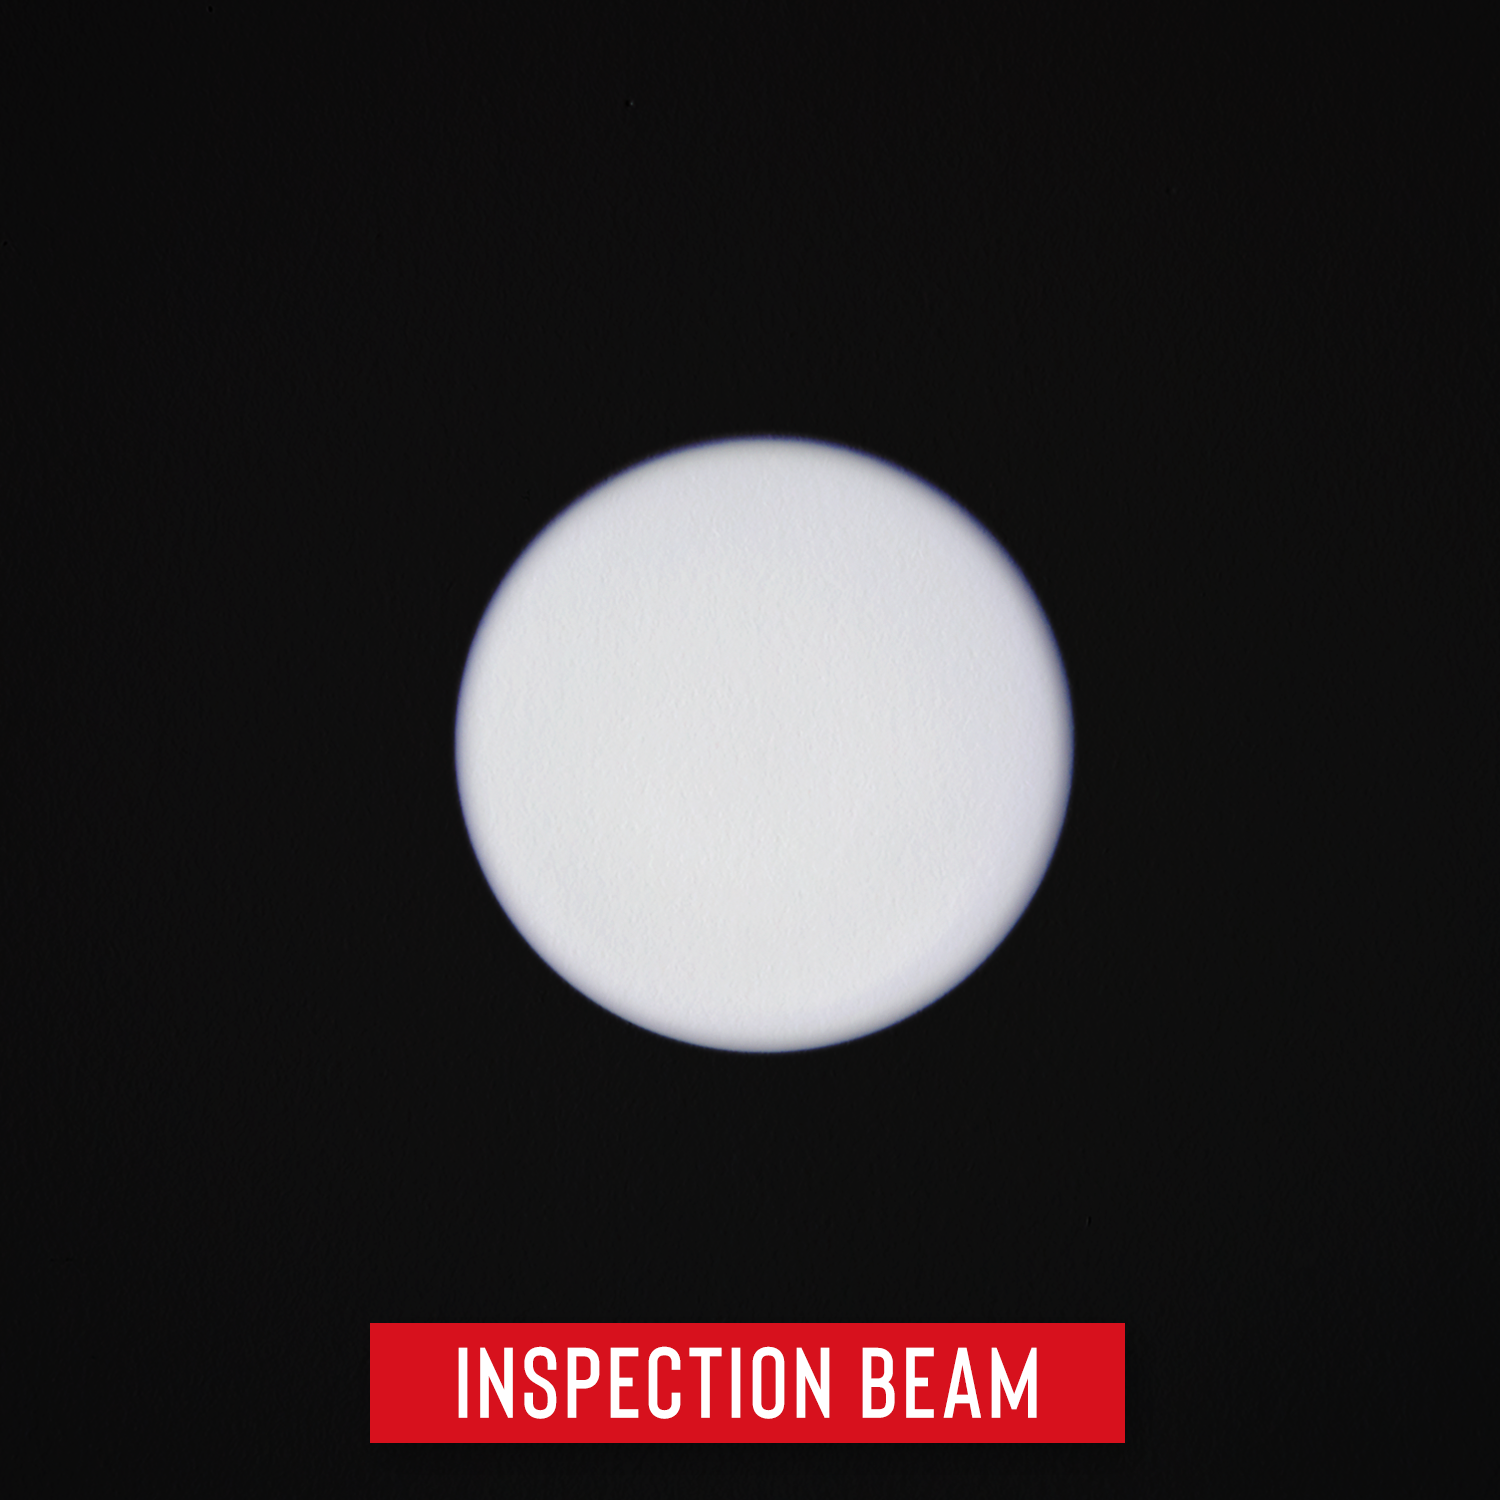 COAST G20 Dual Power 120 Lumen Inspection Beam LED Penlight, 4.2 oz - image 2 of 5